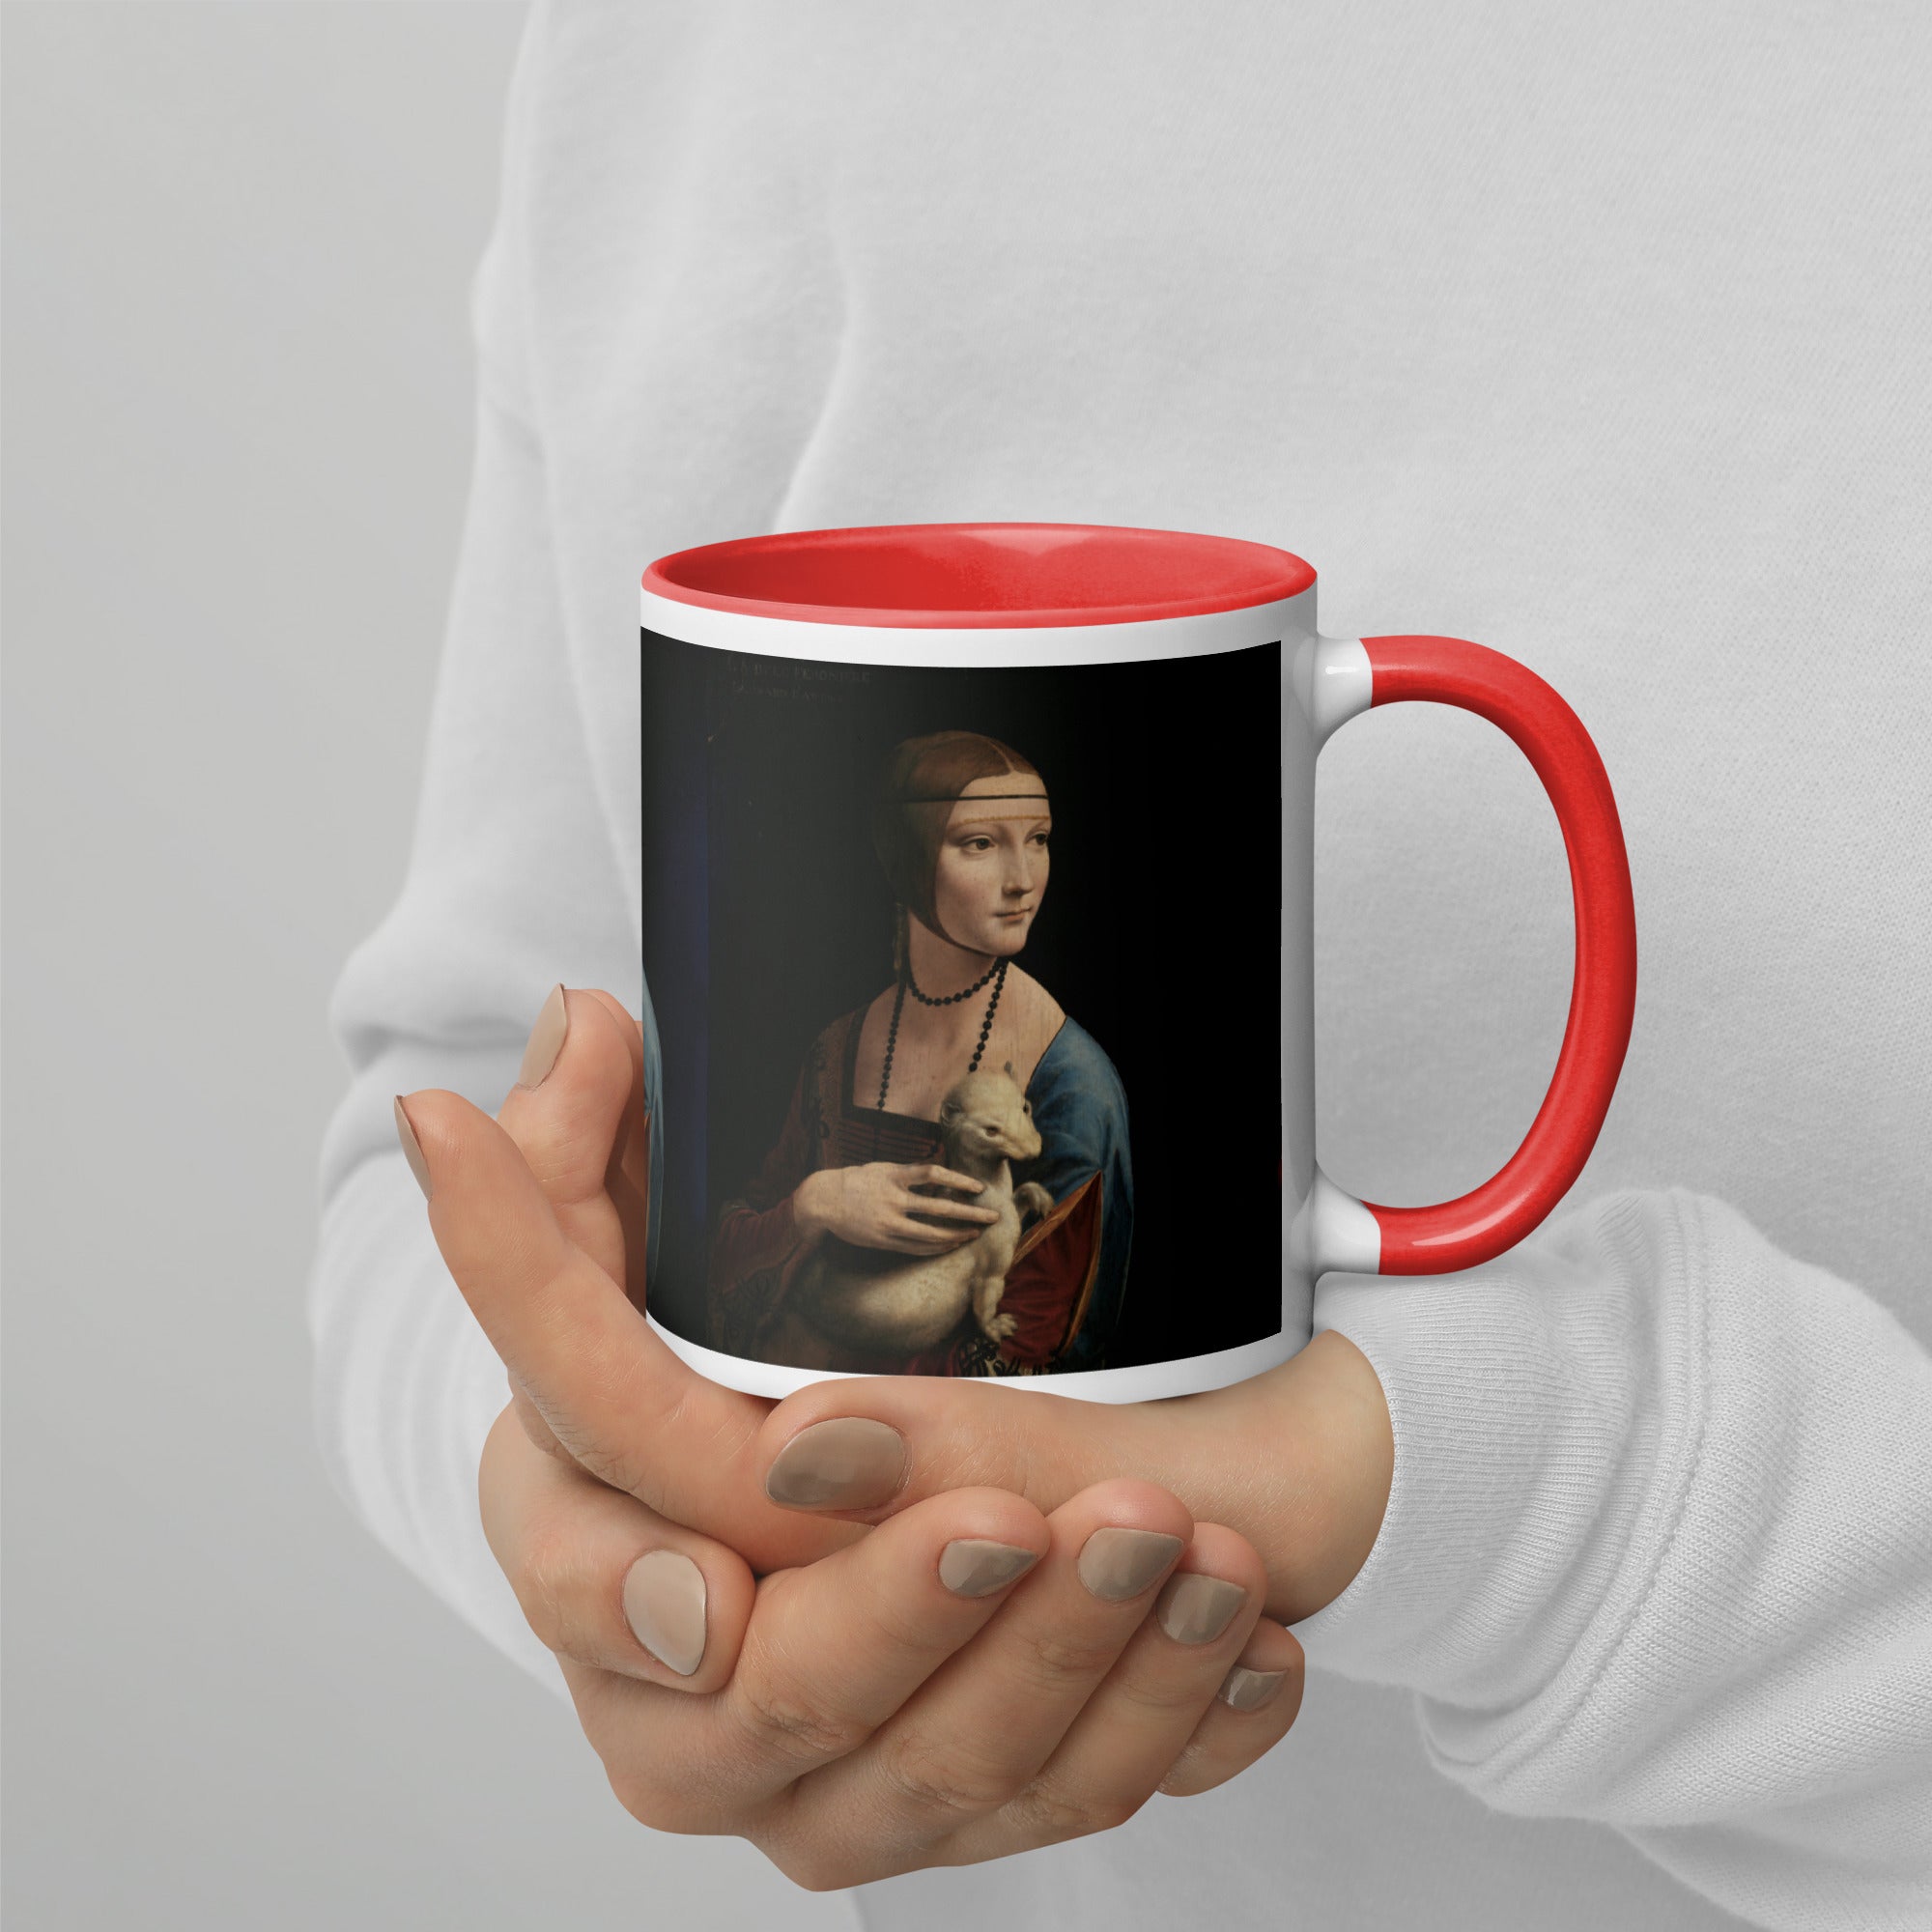 Leonardo da Vinci 'Lady with an Ermine' Famous Painting Ceramic Mug | Premium Art Mug